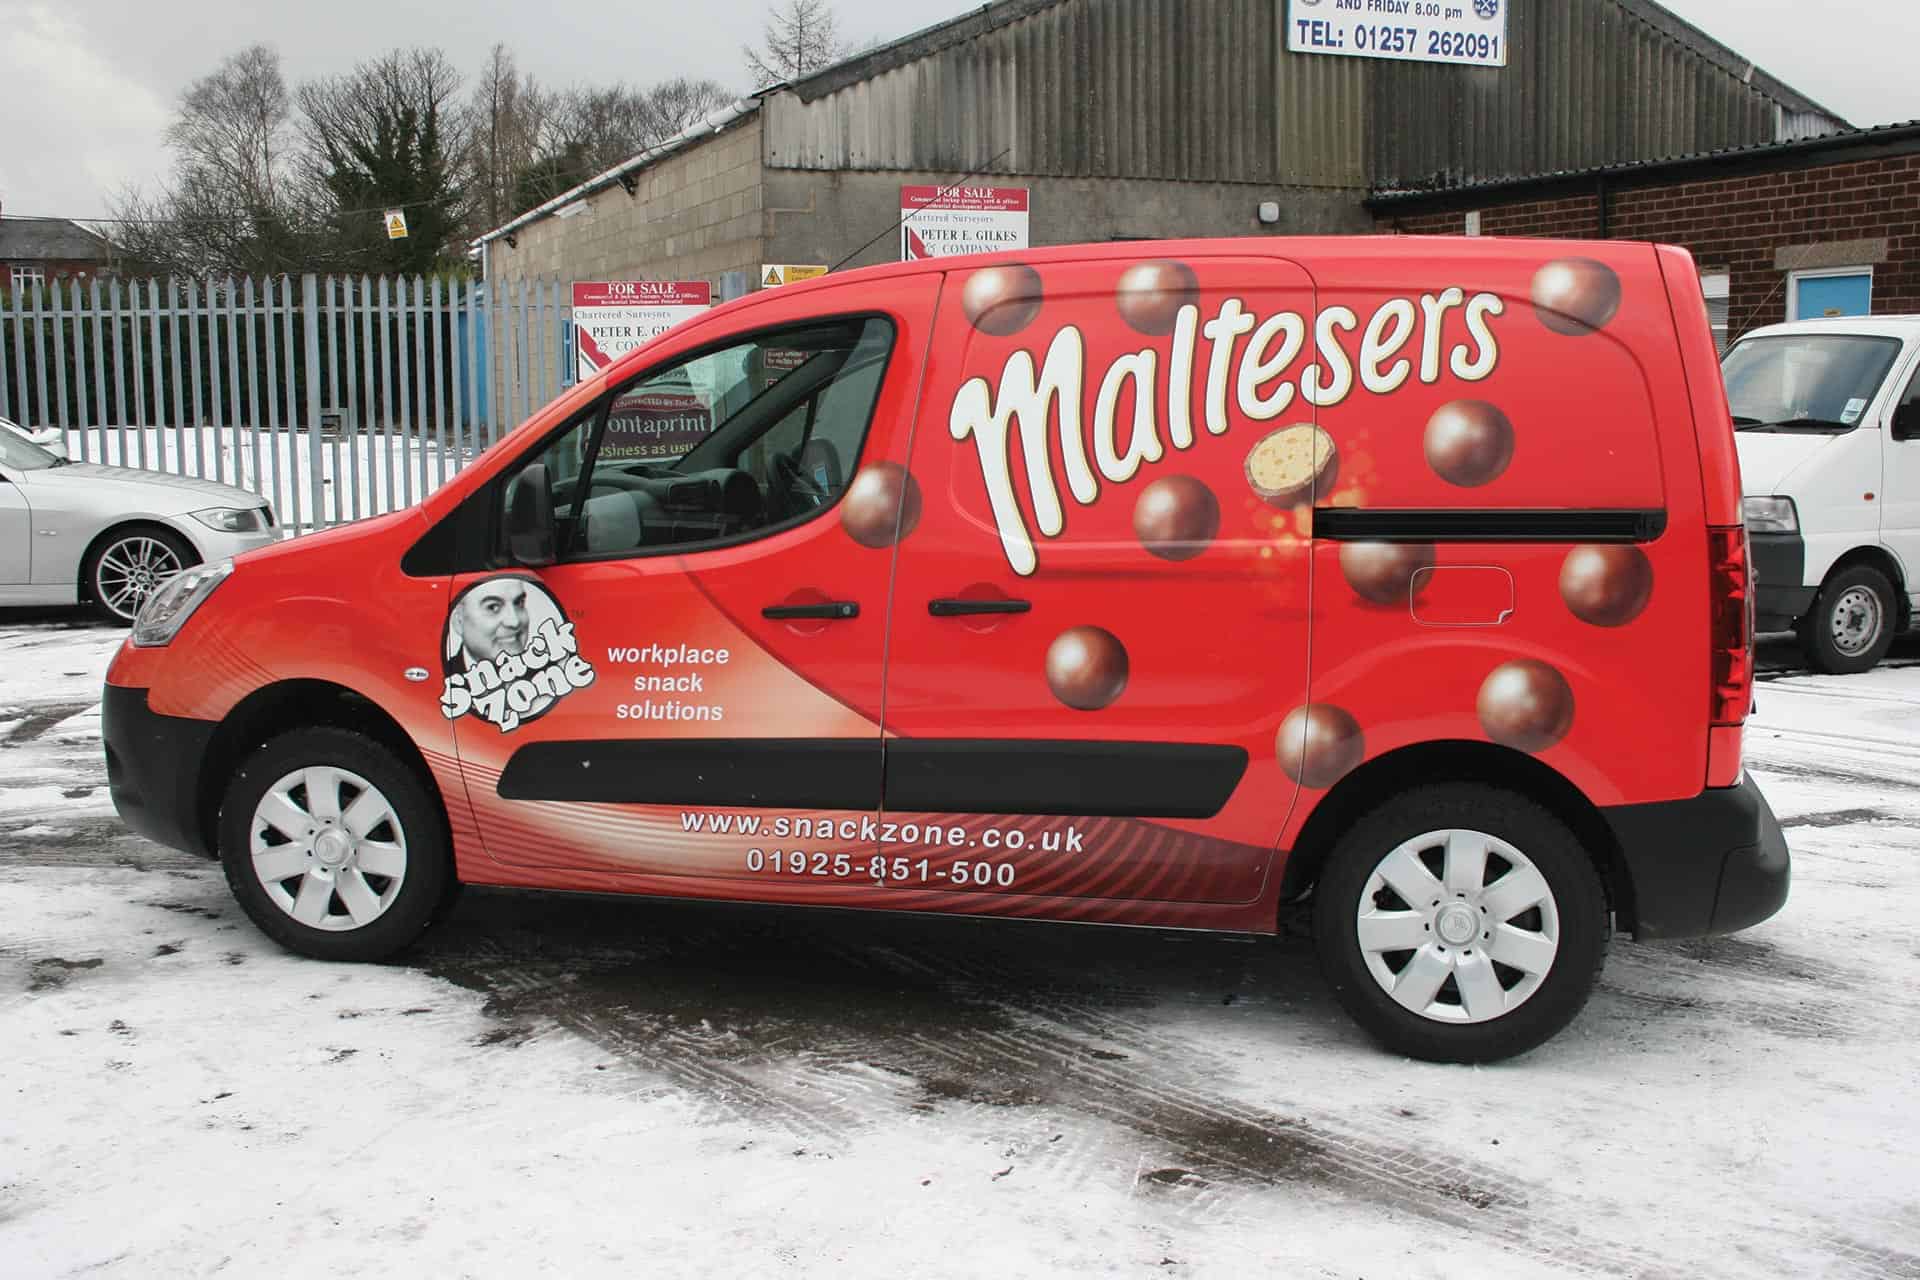 Maltesers - full vehicle wrap